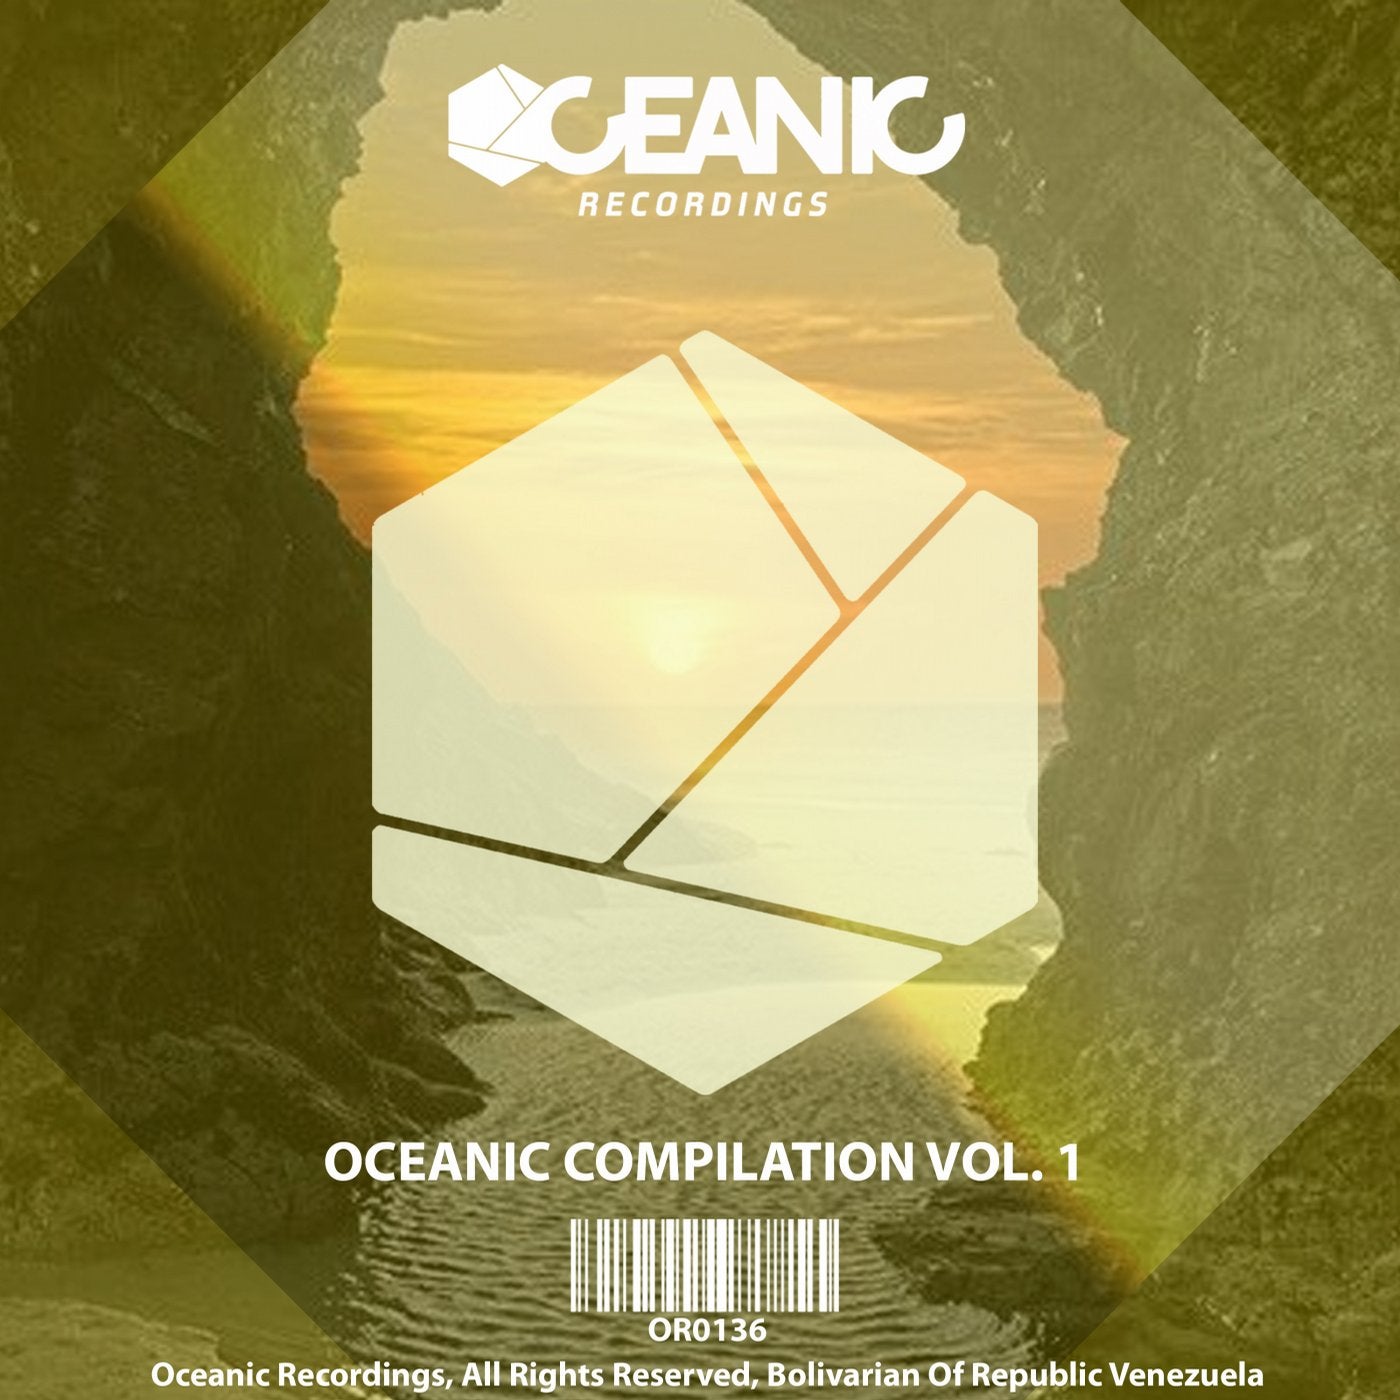 Oceanic Compilation Vol 1